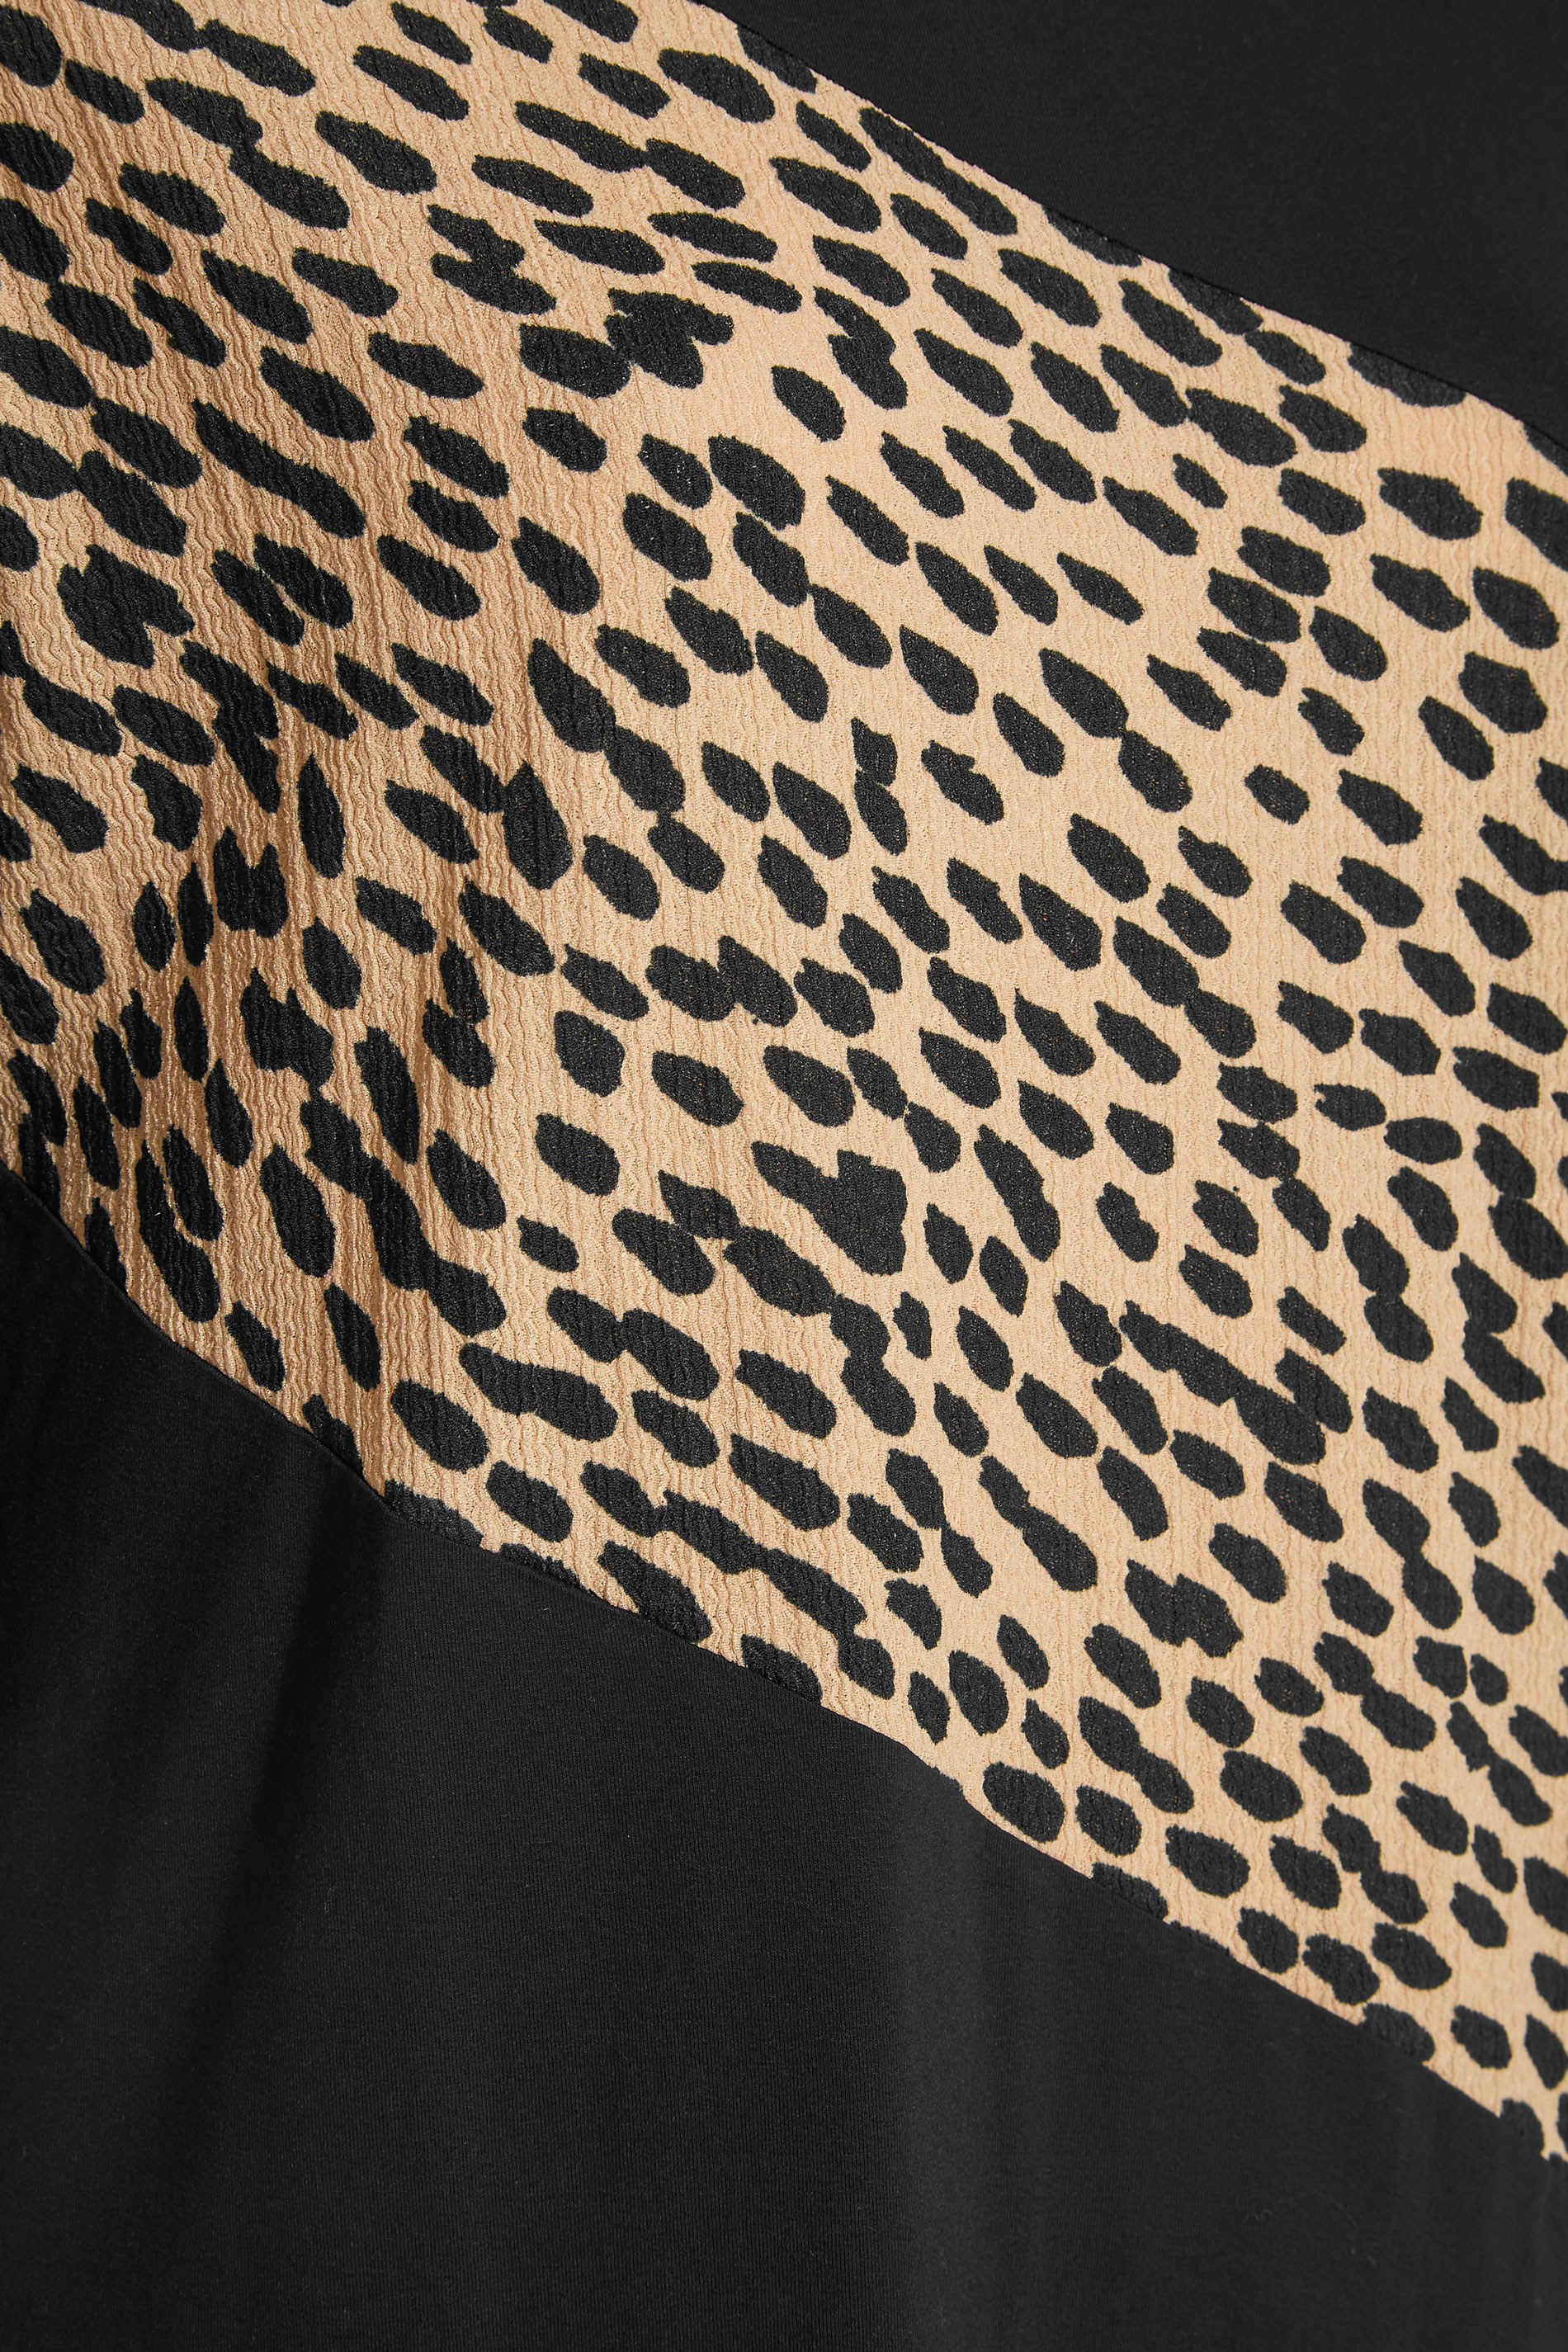 Grande taille  Tops Grande taille  Tops Jersey | T-Shirt Noir Bande Léopard Style Oversize - CK91153